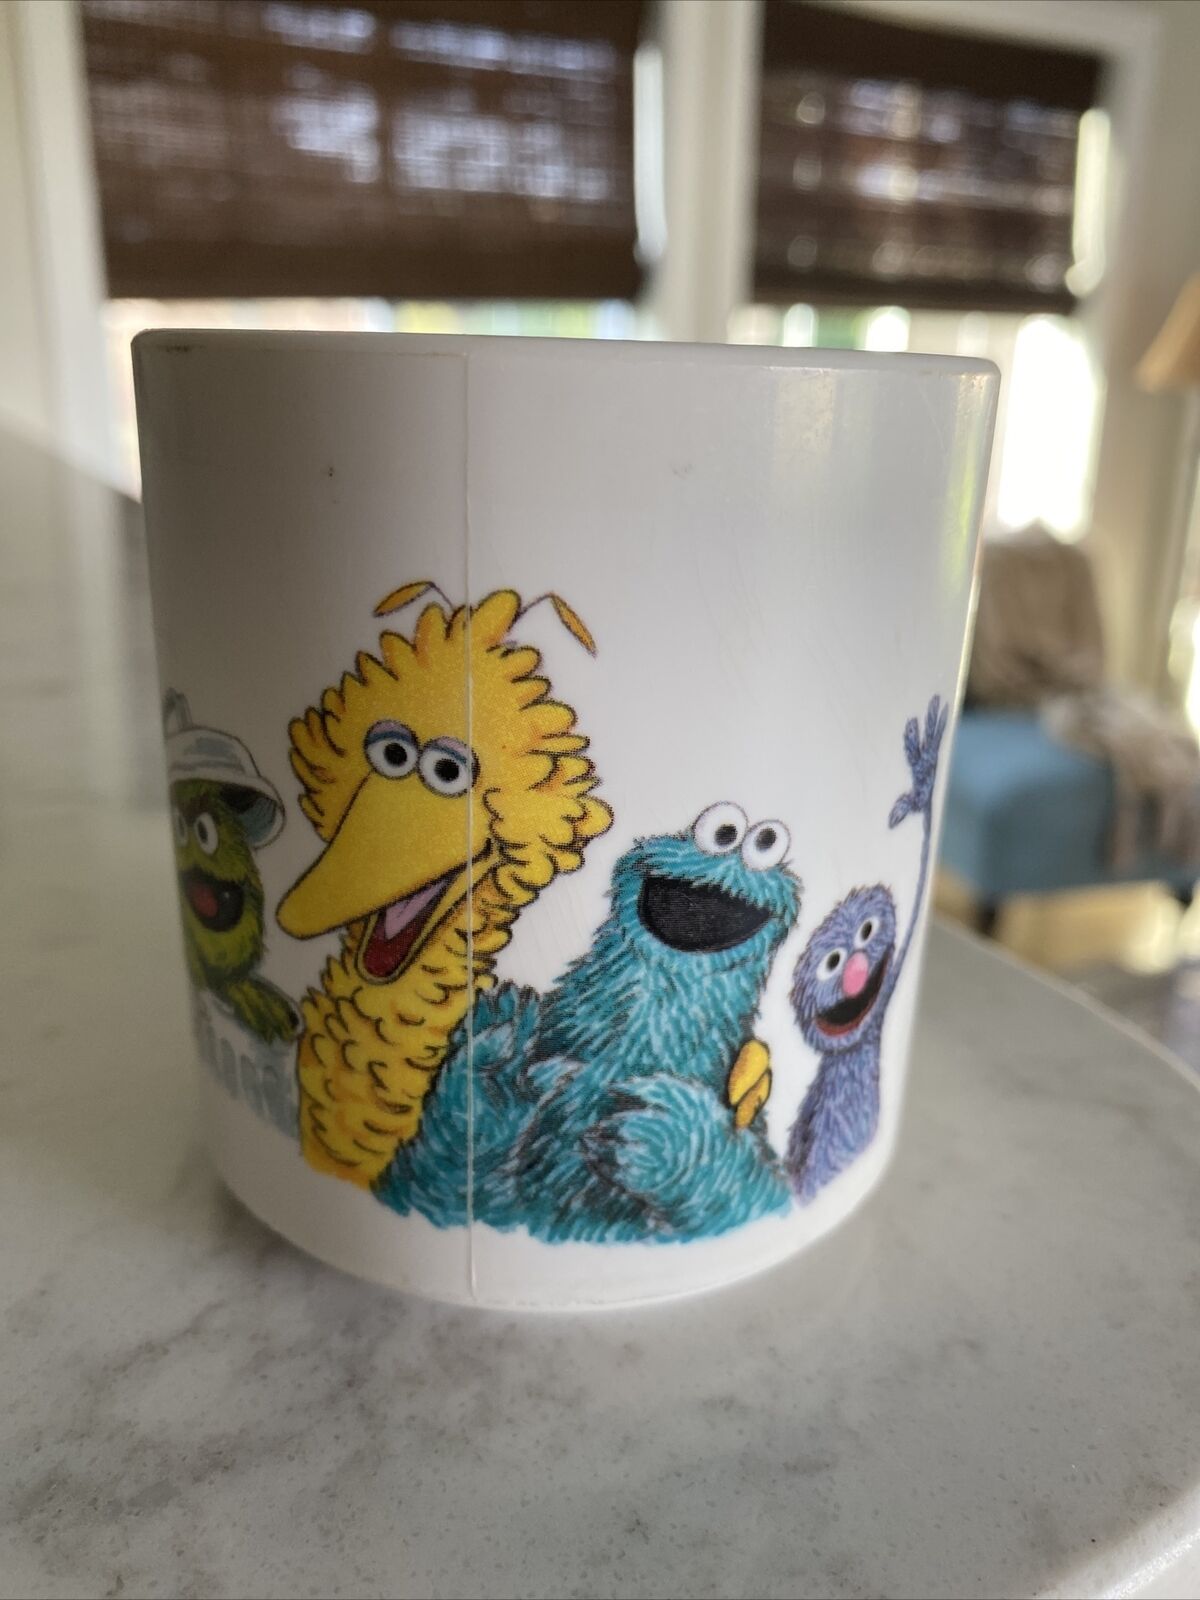 Vintage 1970s Muppets Inc Sesame Street Plastic Cup Mug Grover Big Bird Oscar